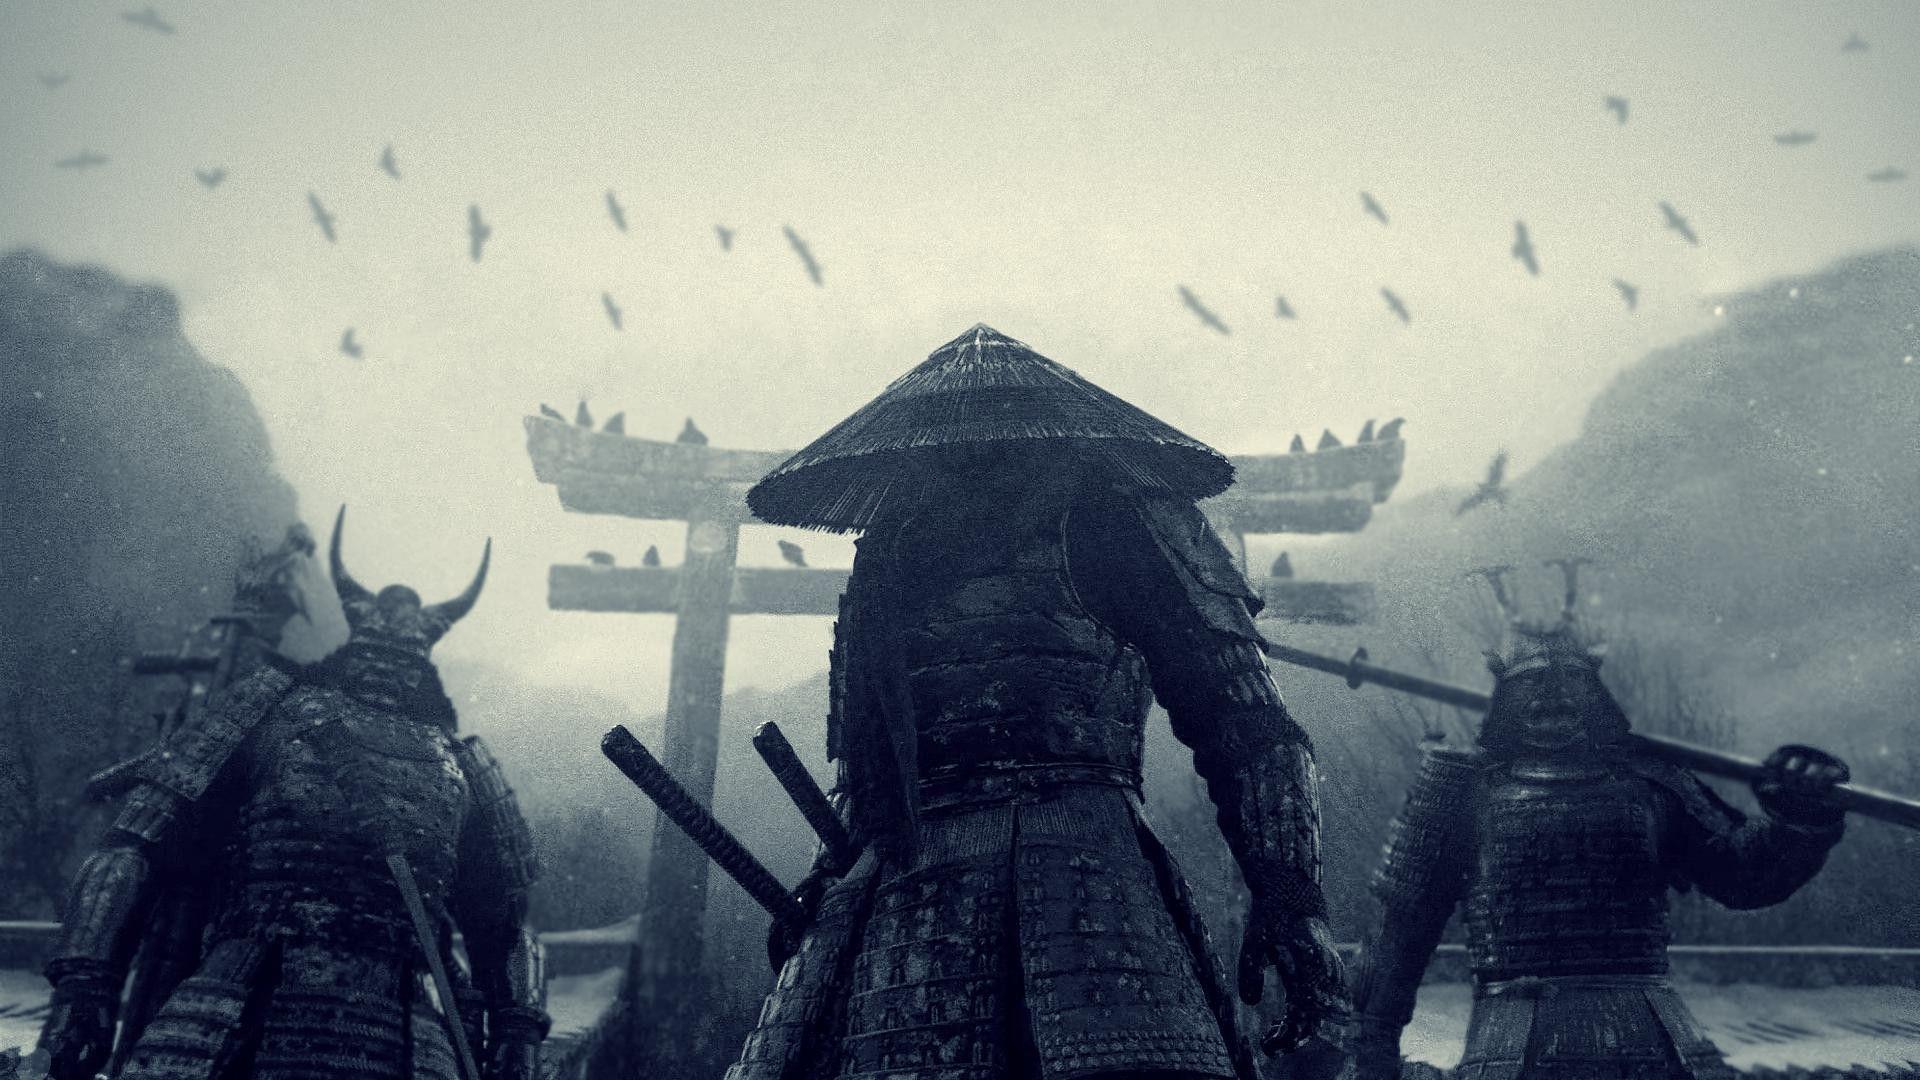 Samurai Warriors Wallpaper Free HD. Cartoons Image. Hagakure El